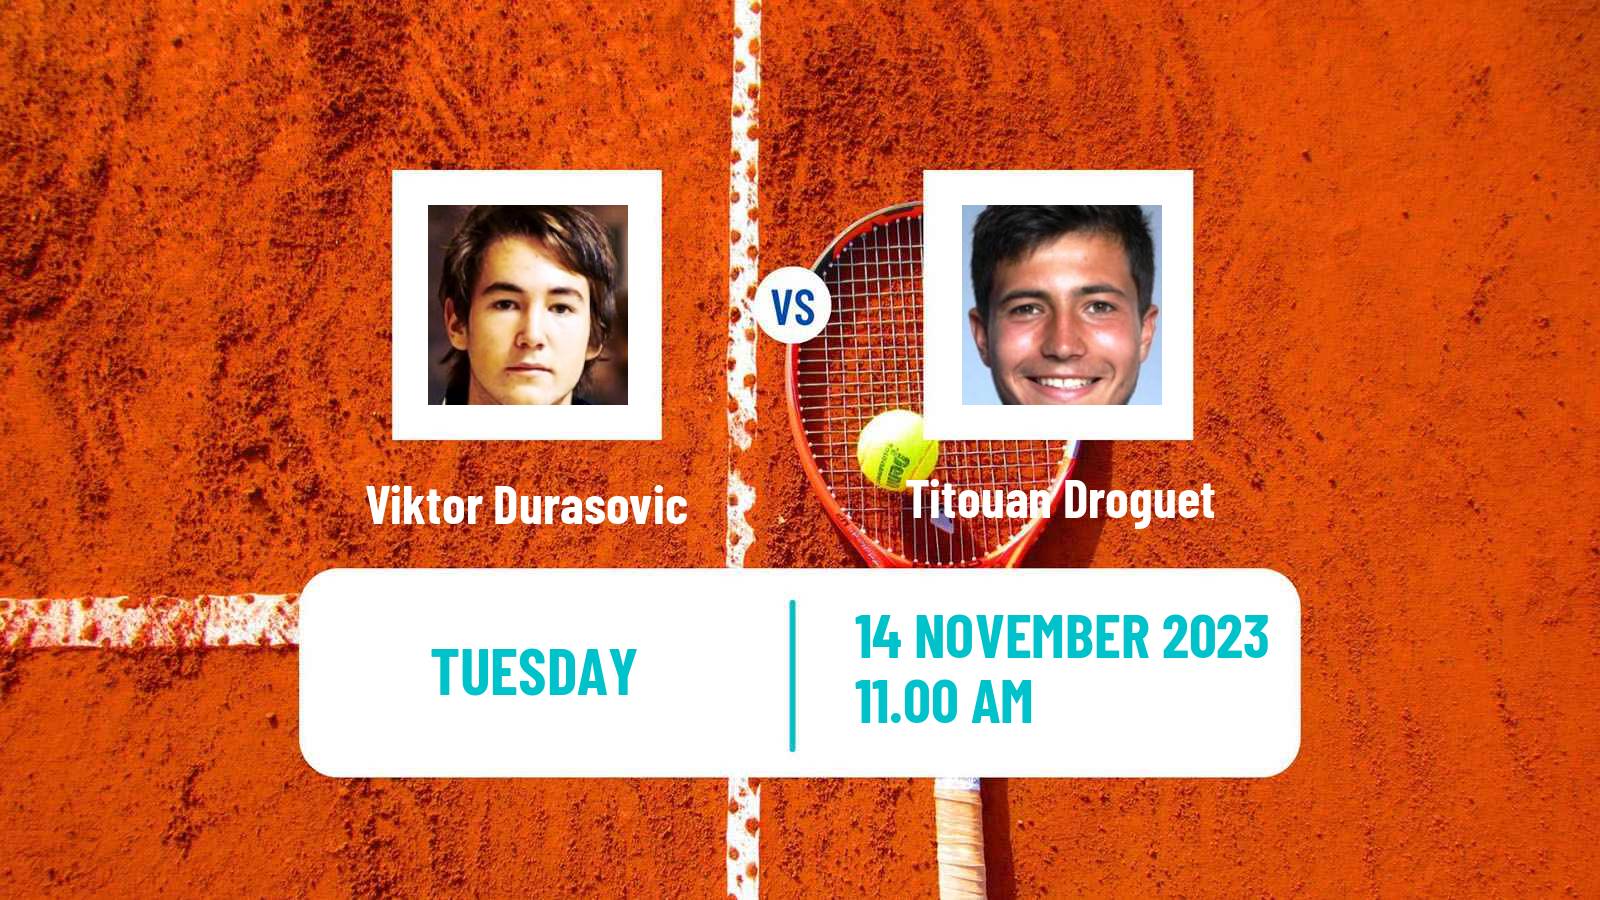 Tennis Champaign Challenger Men Viktor Durasovic - Titouan Droguet